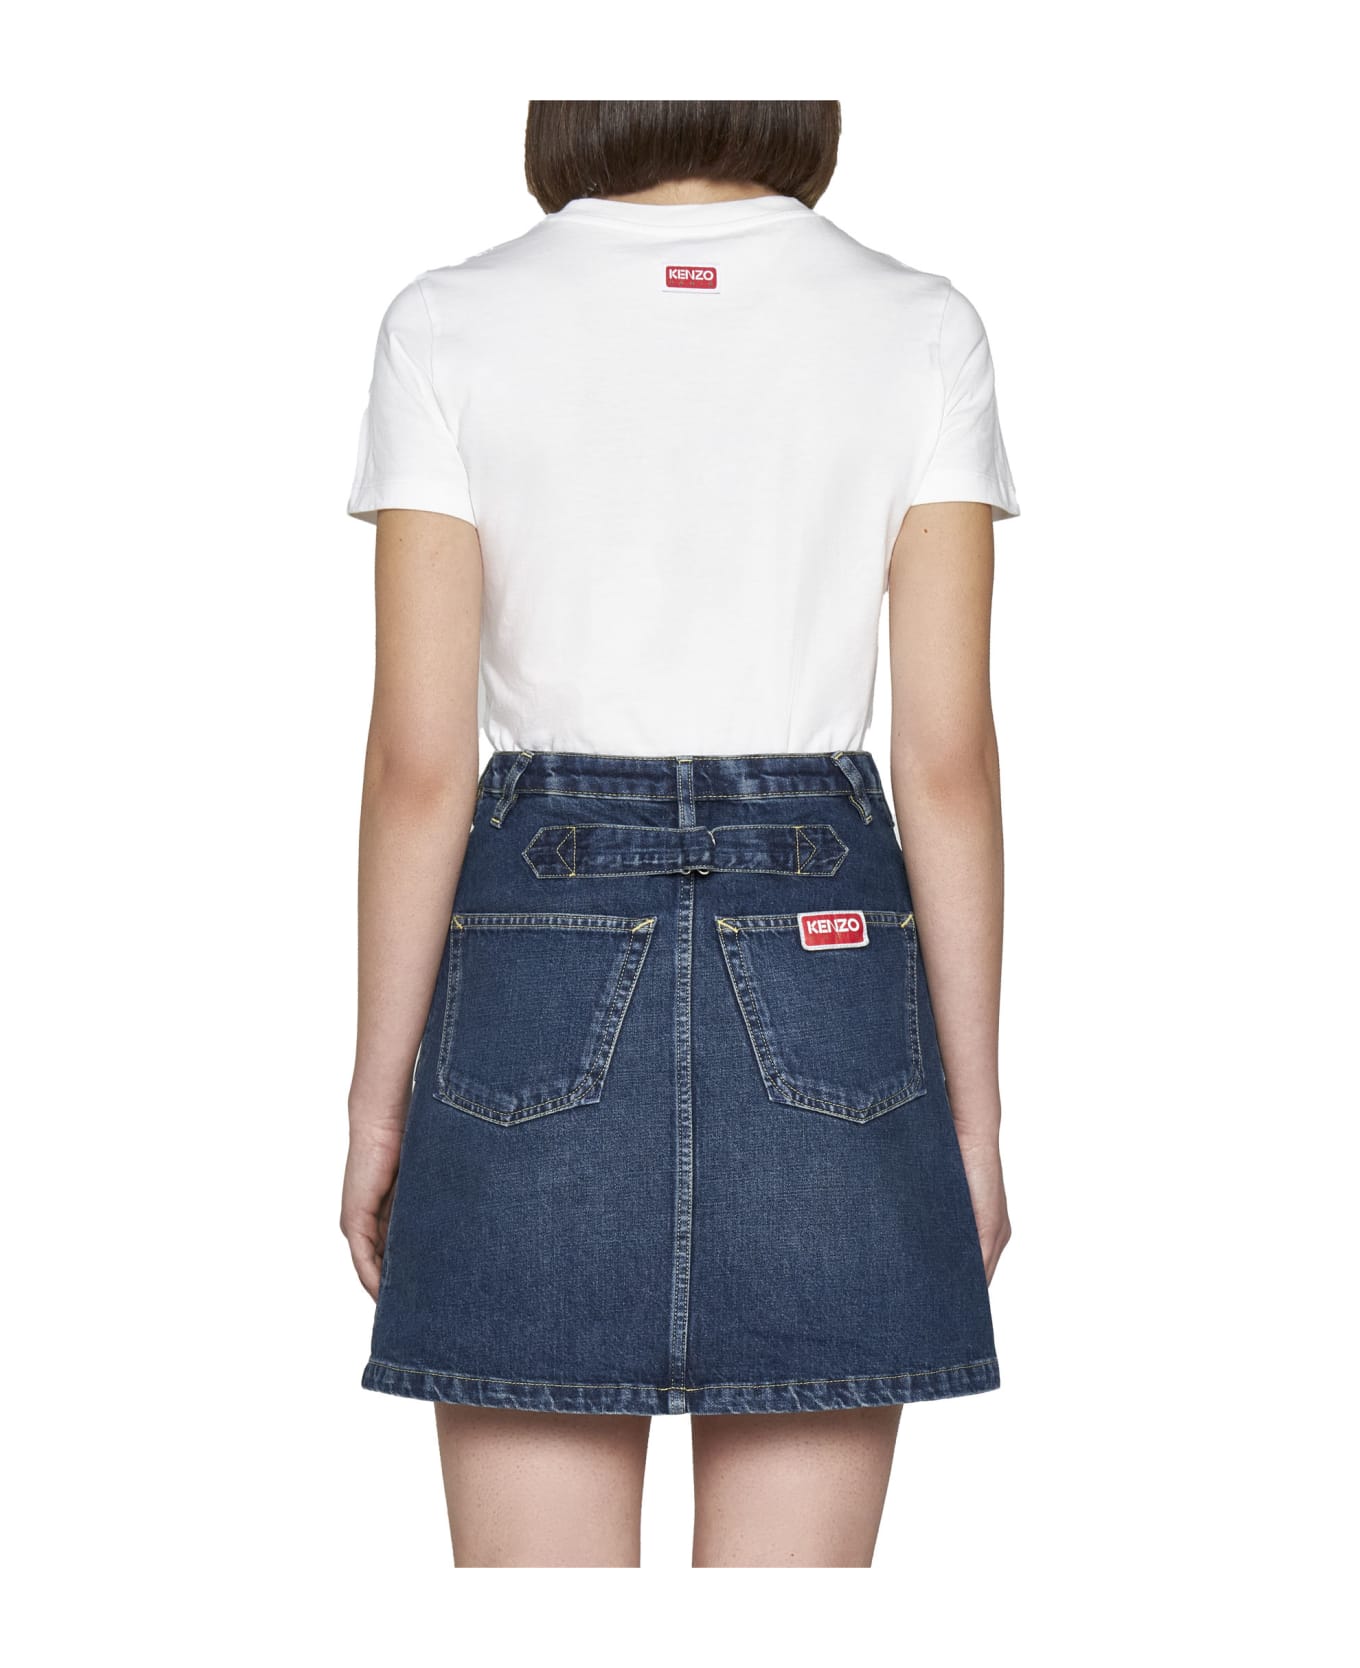 Kenzo Denim Mini Skirt - Denim